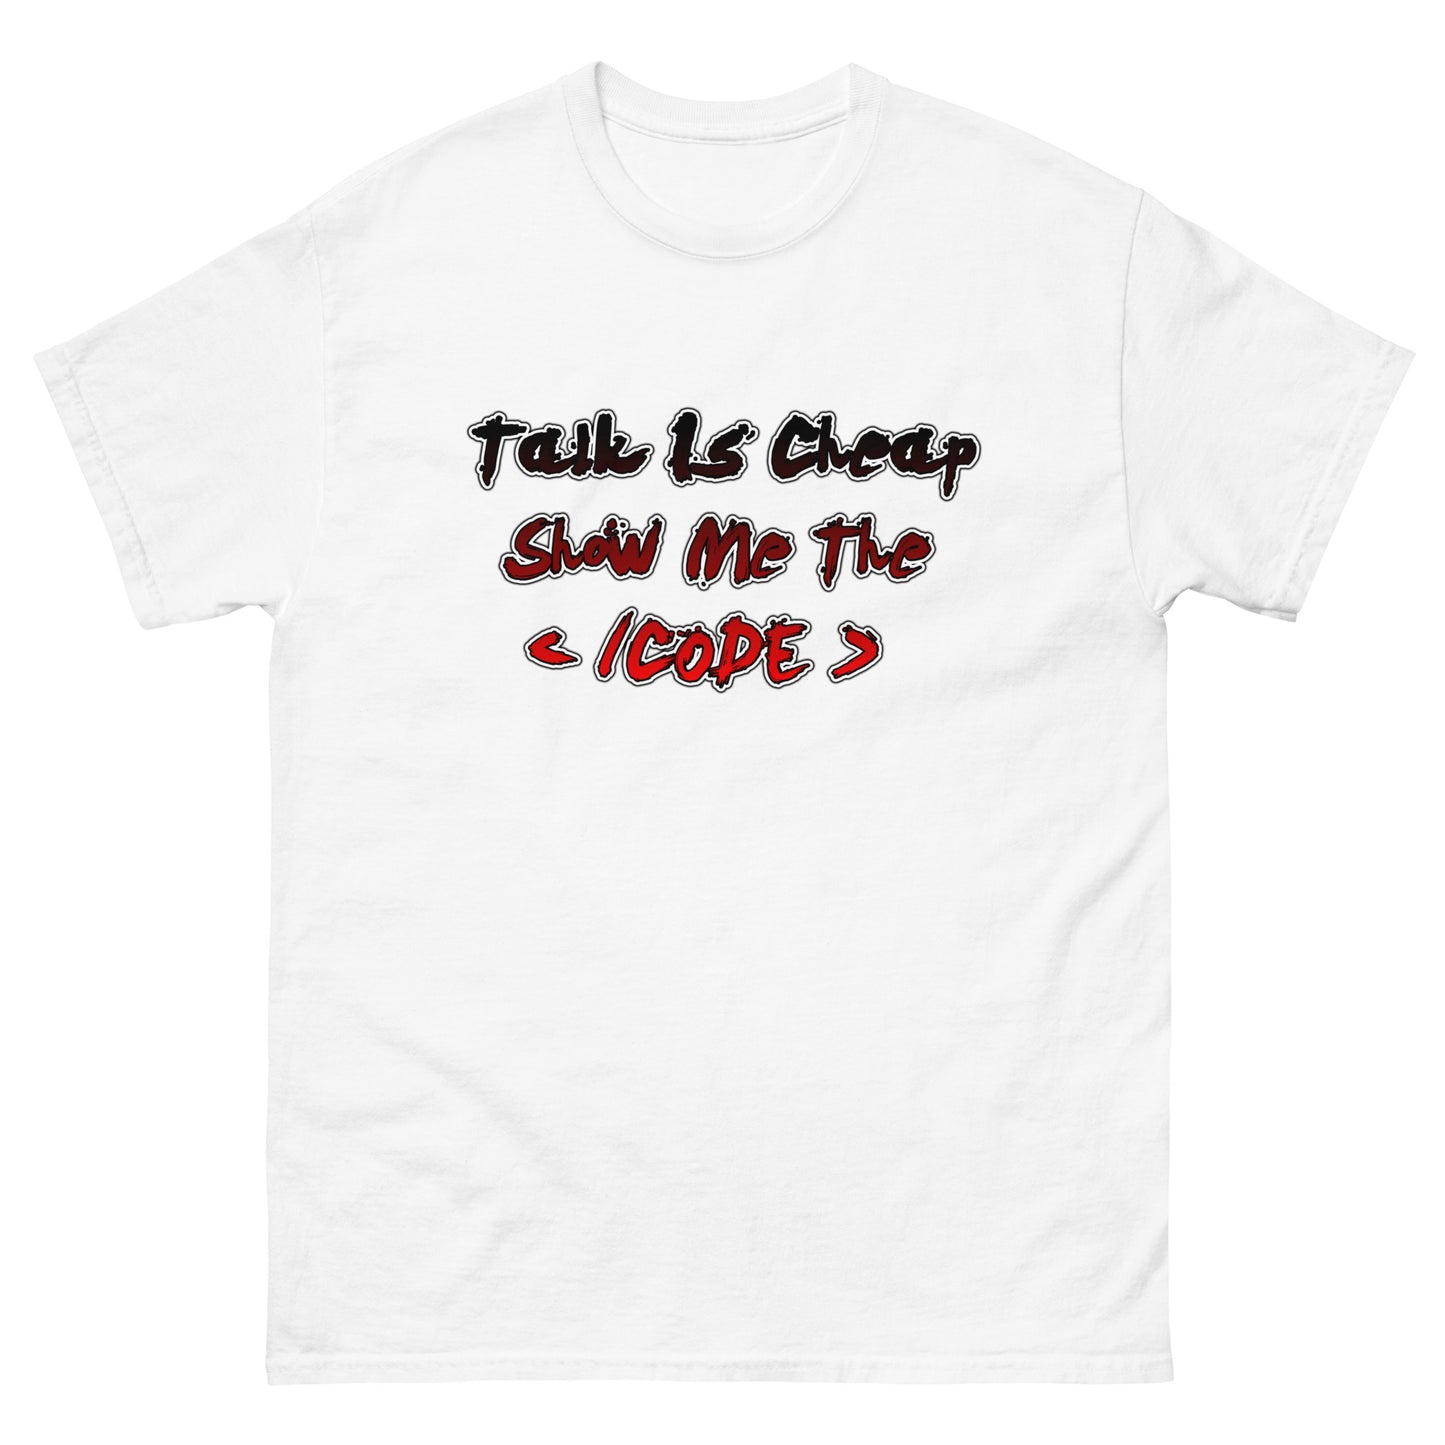 Talk is CHEAP! - classic tee